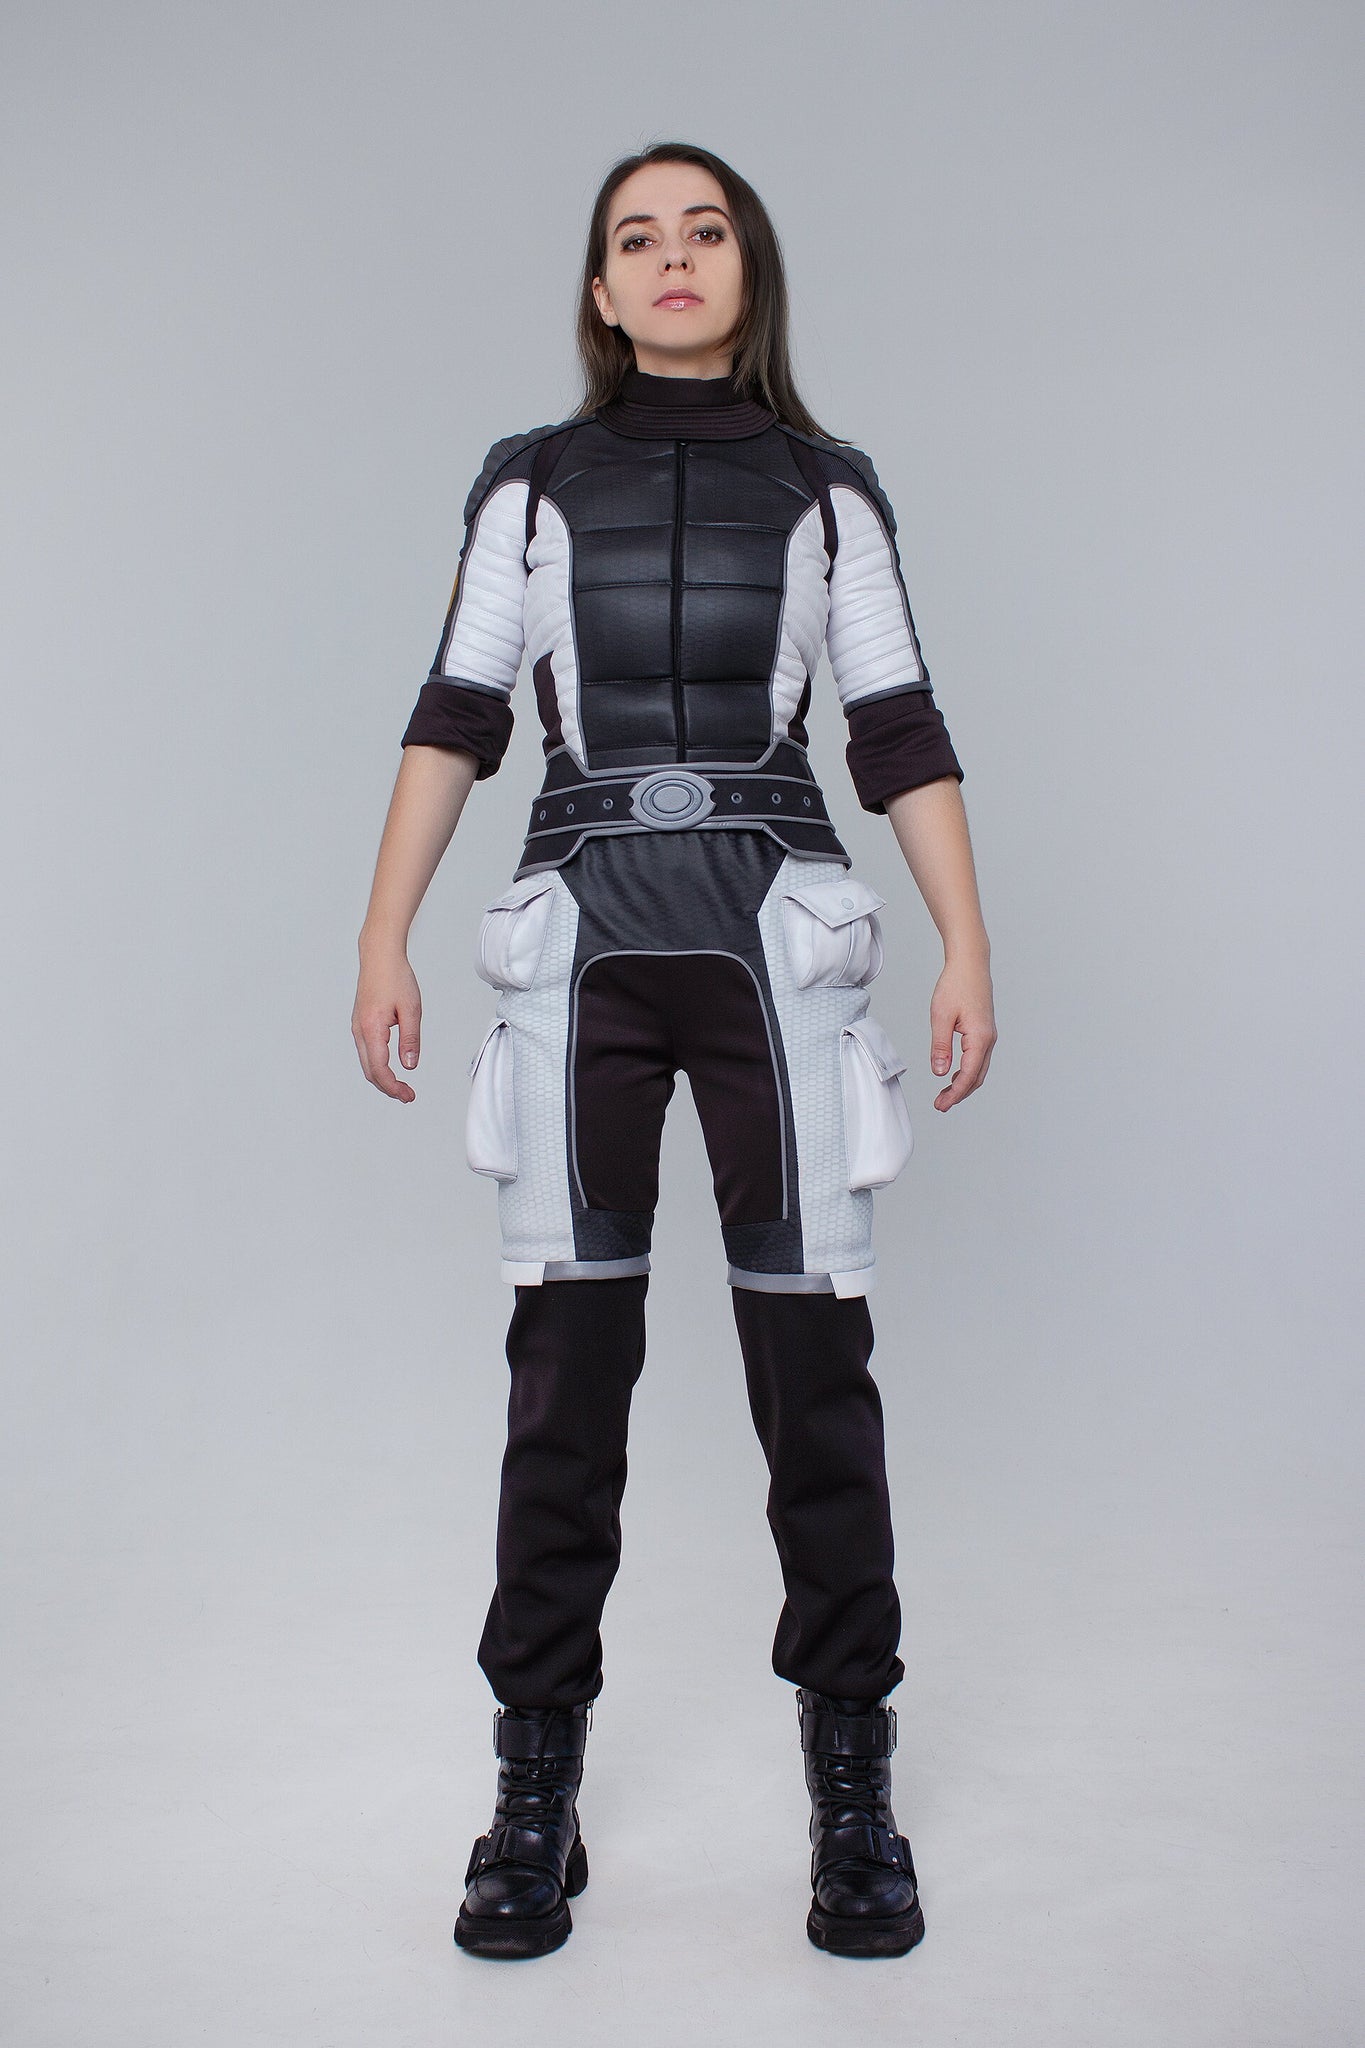 Female Shepard Alliance cosplay Video game cosplay female alliance cosplay Ashley uniform cosplay Mass Effect women cosplay uniform